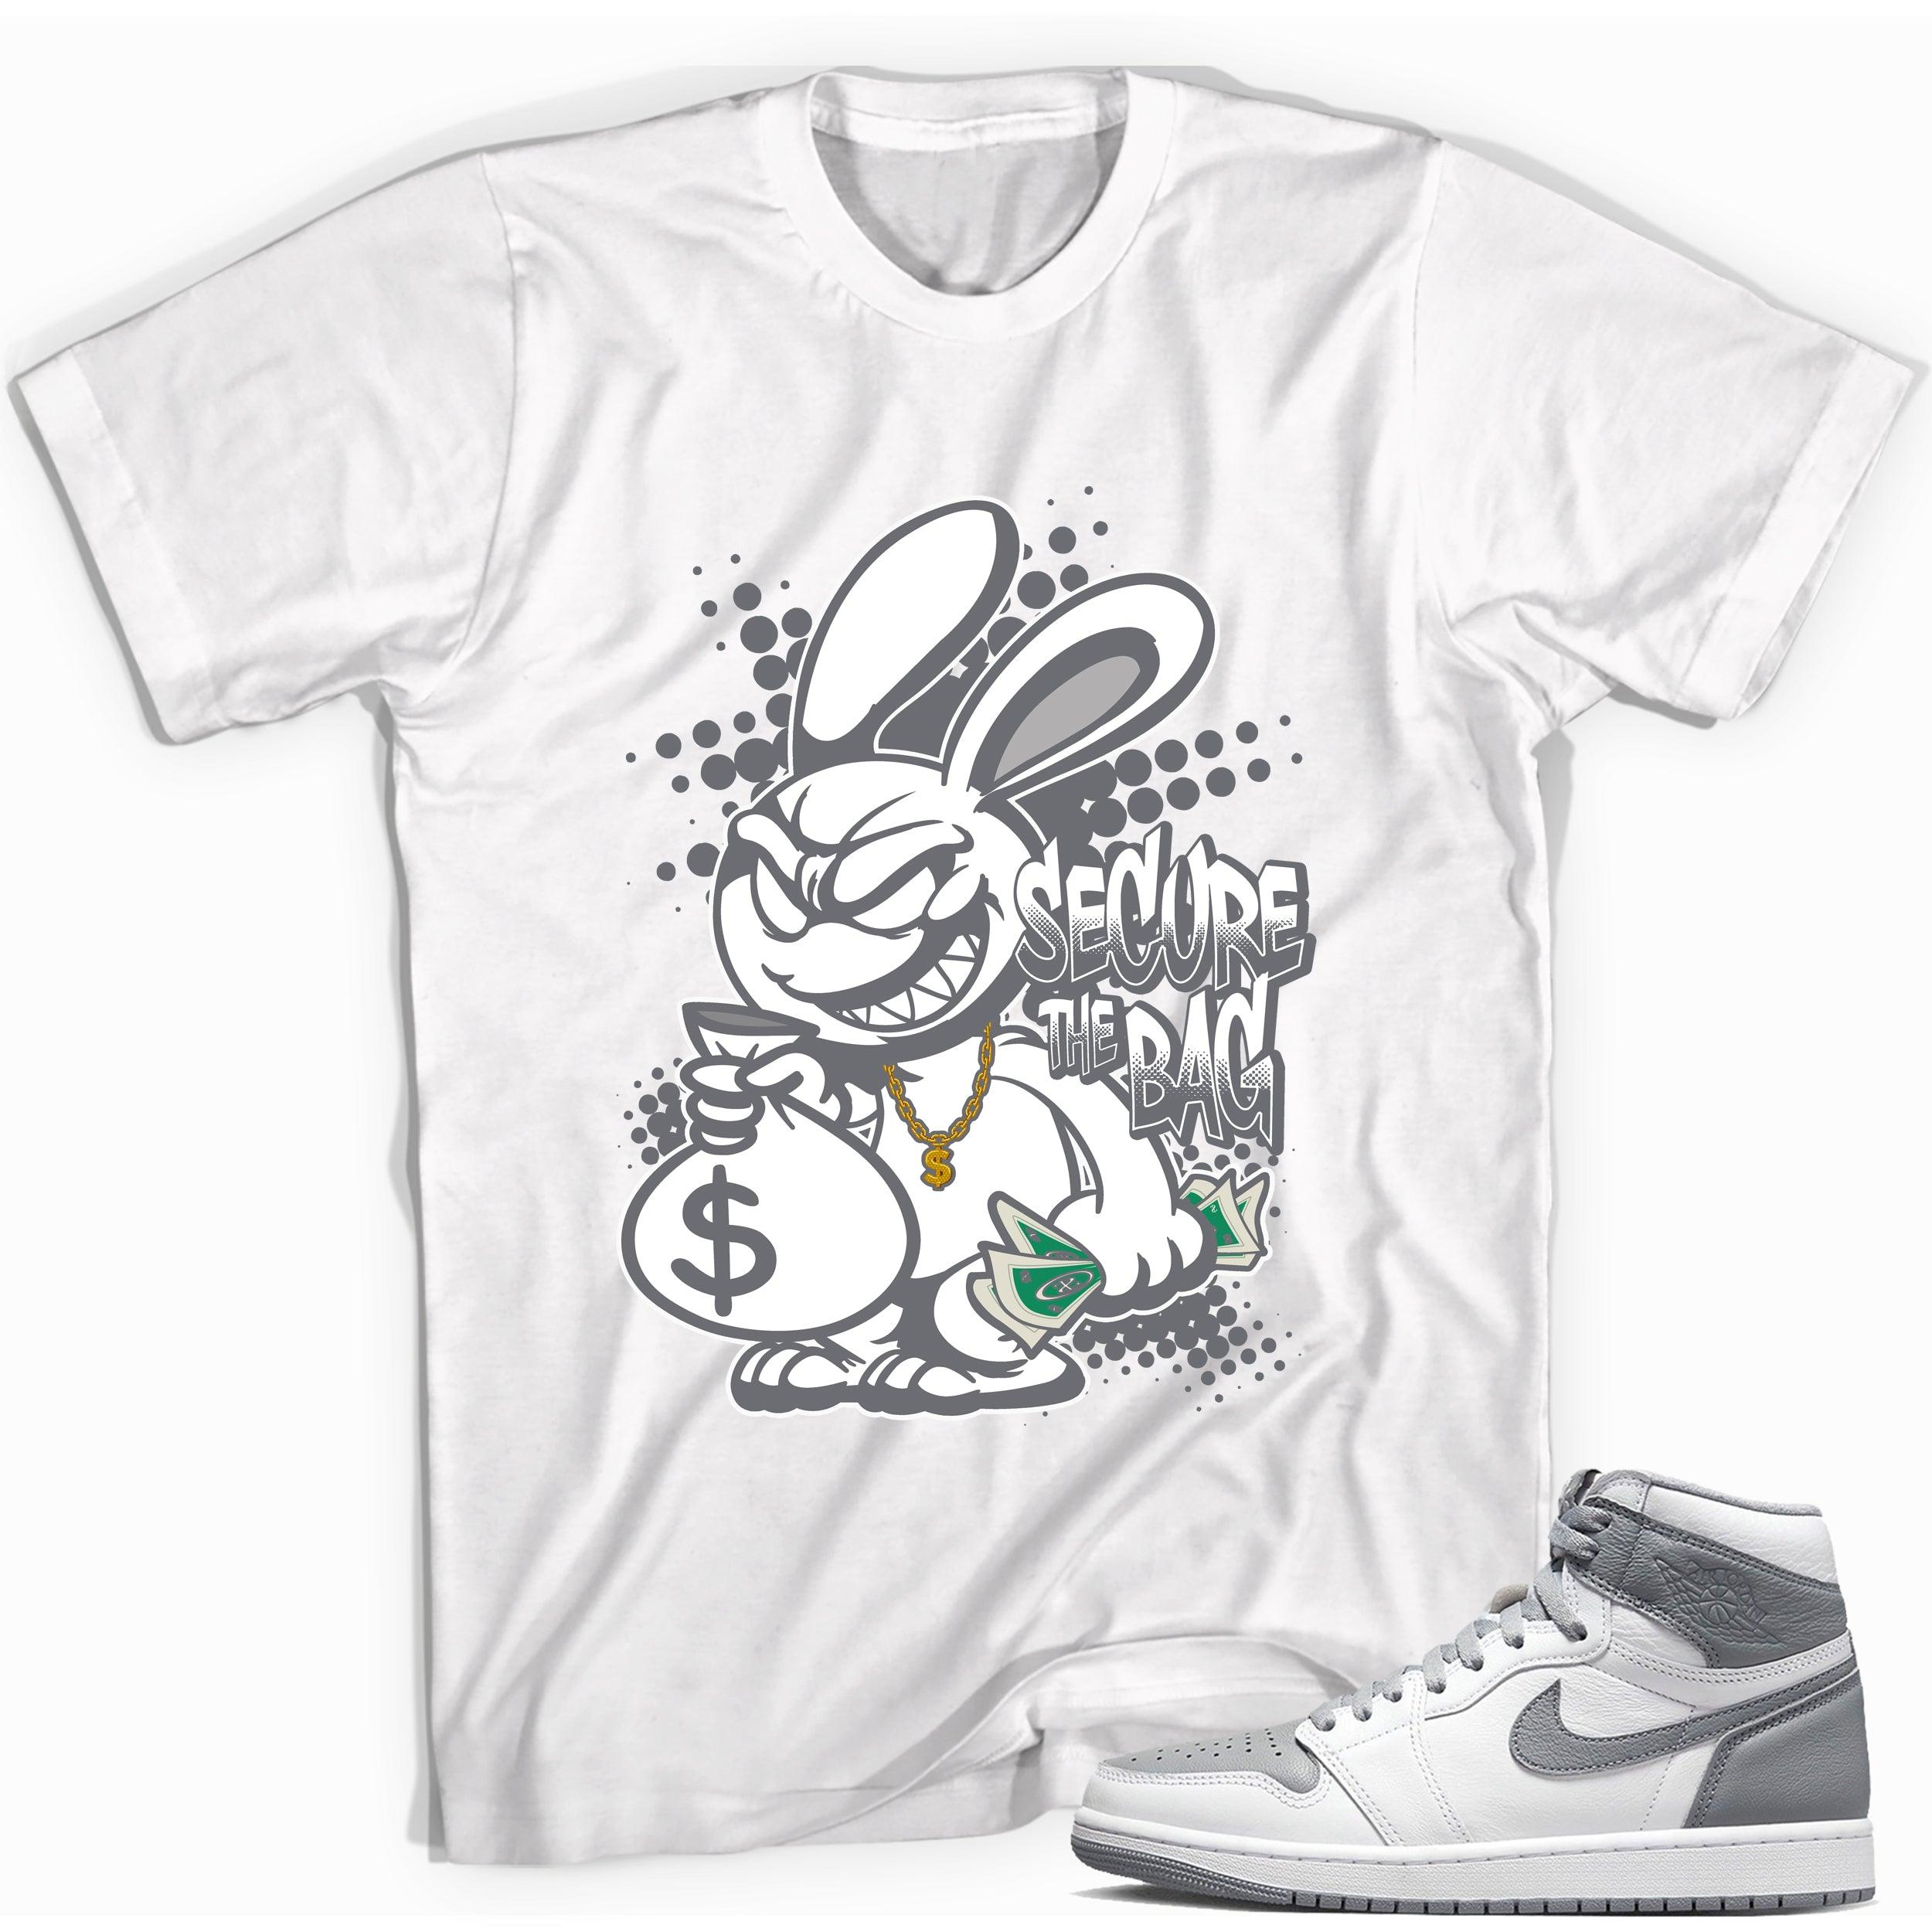 Secure the Bag Rabbit Shirt for Jordan 1s photo